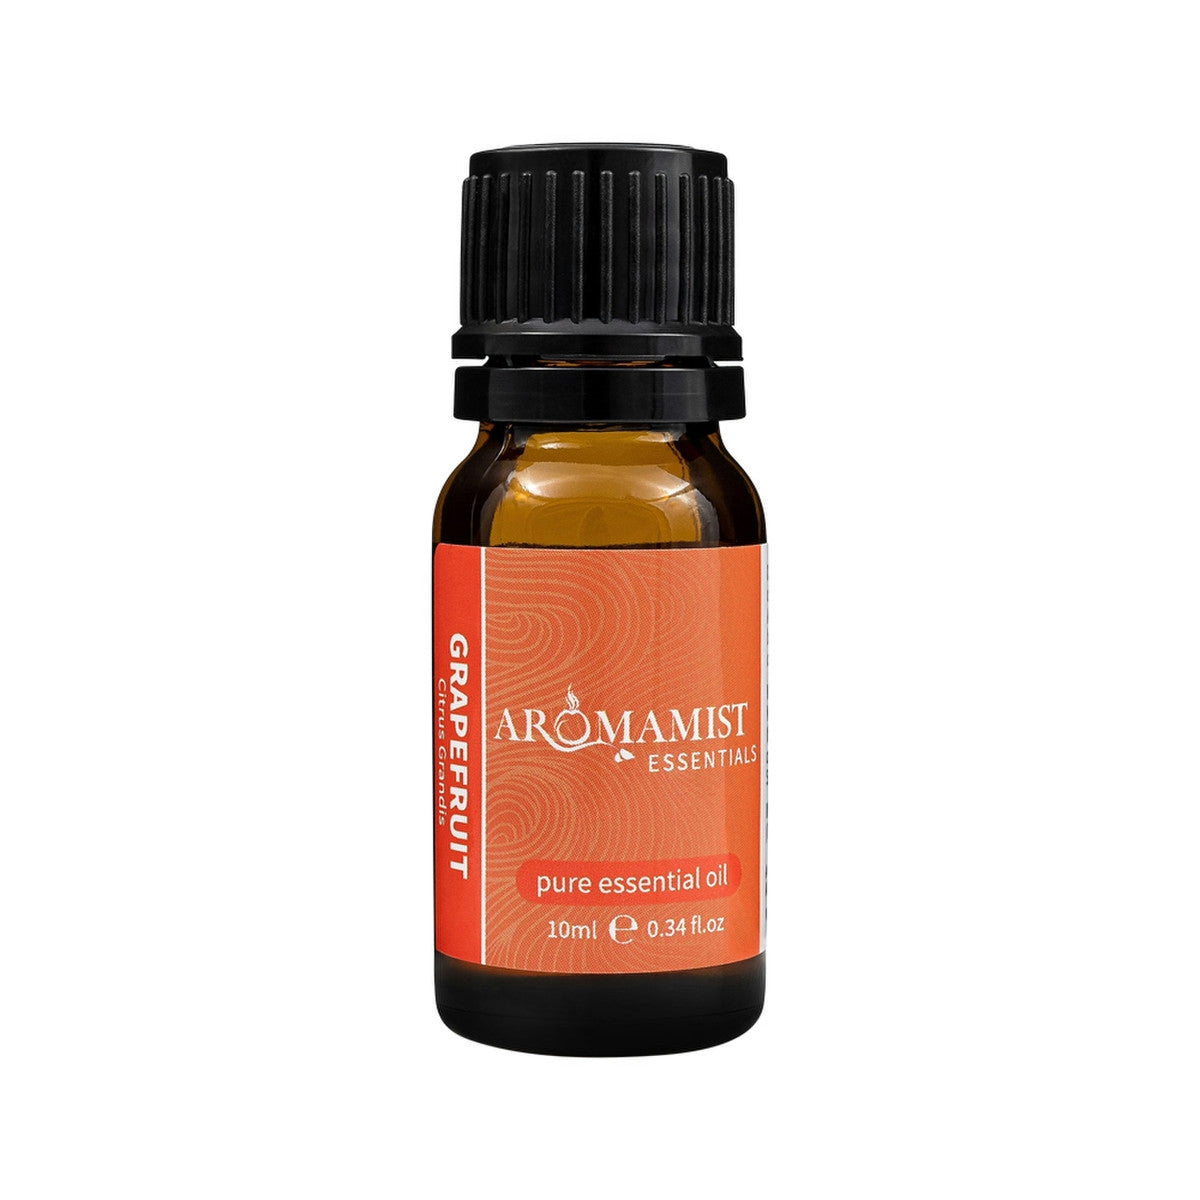 image of Aromamist Essentials Pure Essential Oil Grapefruit 10ml on white background